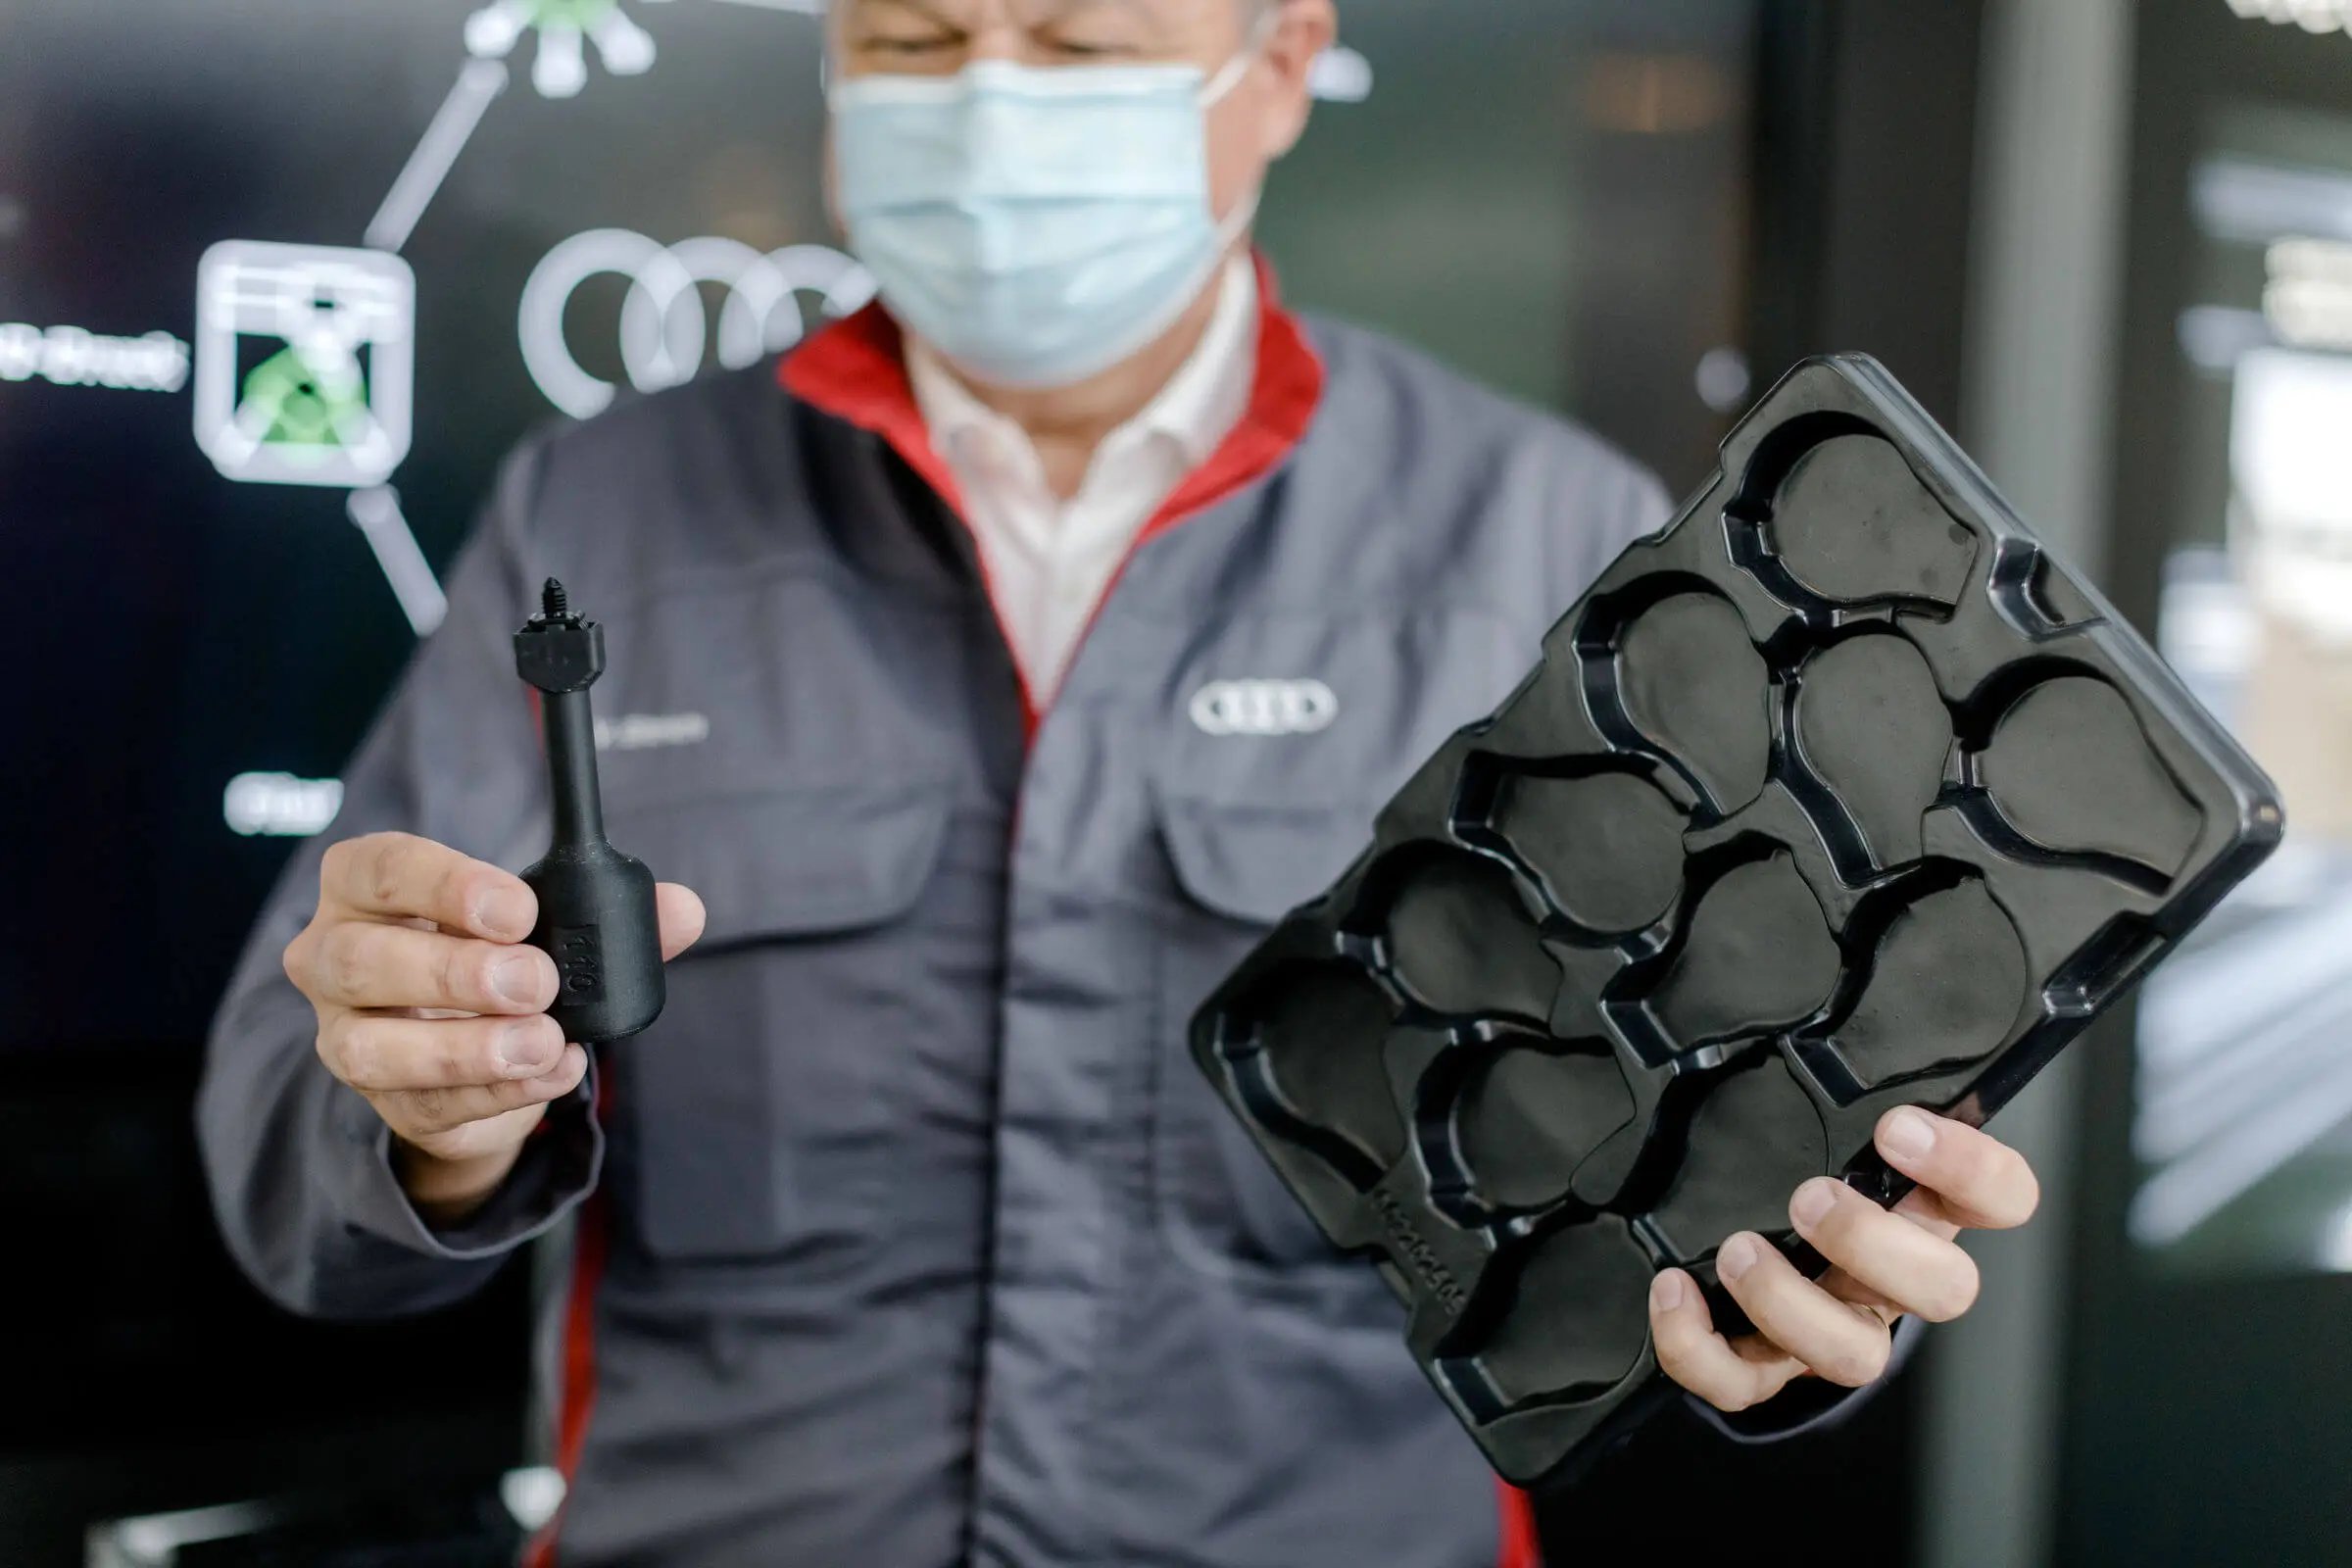 3devo's Machines Revolutionize Audi's Plastic Recycling